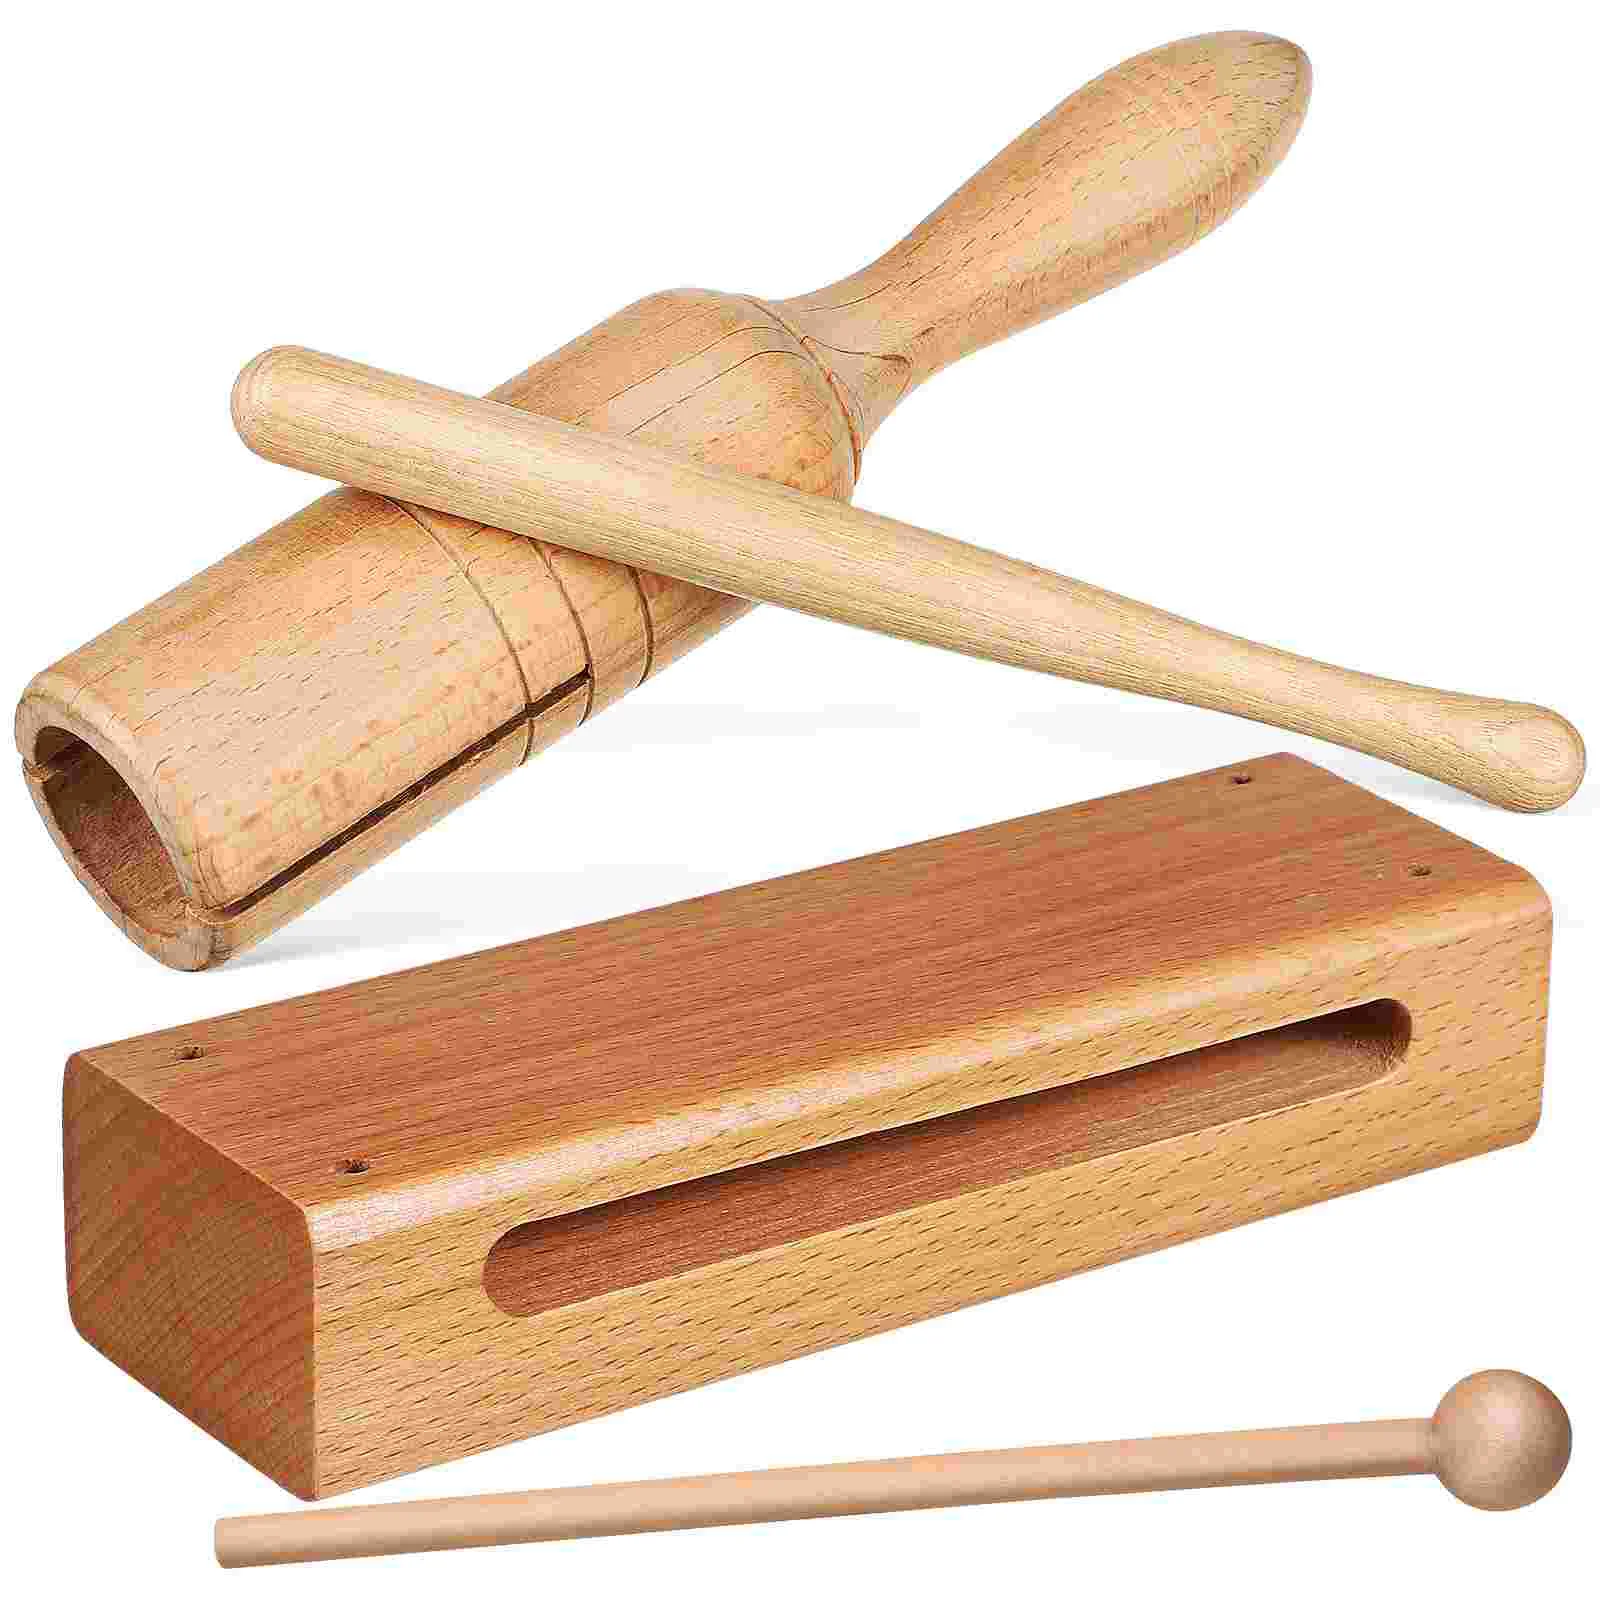 

Orff Instrument Percussion Rhythm Wood Blocks Wooden Single Tone Mallets Handheld Beater Building Keys